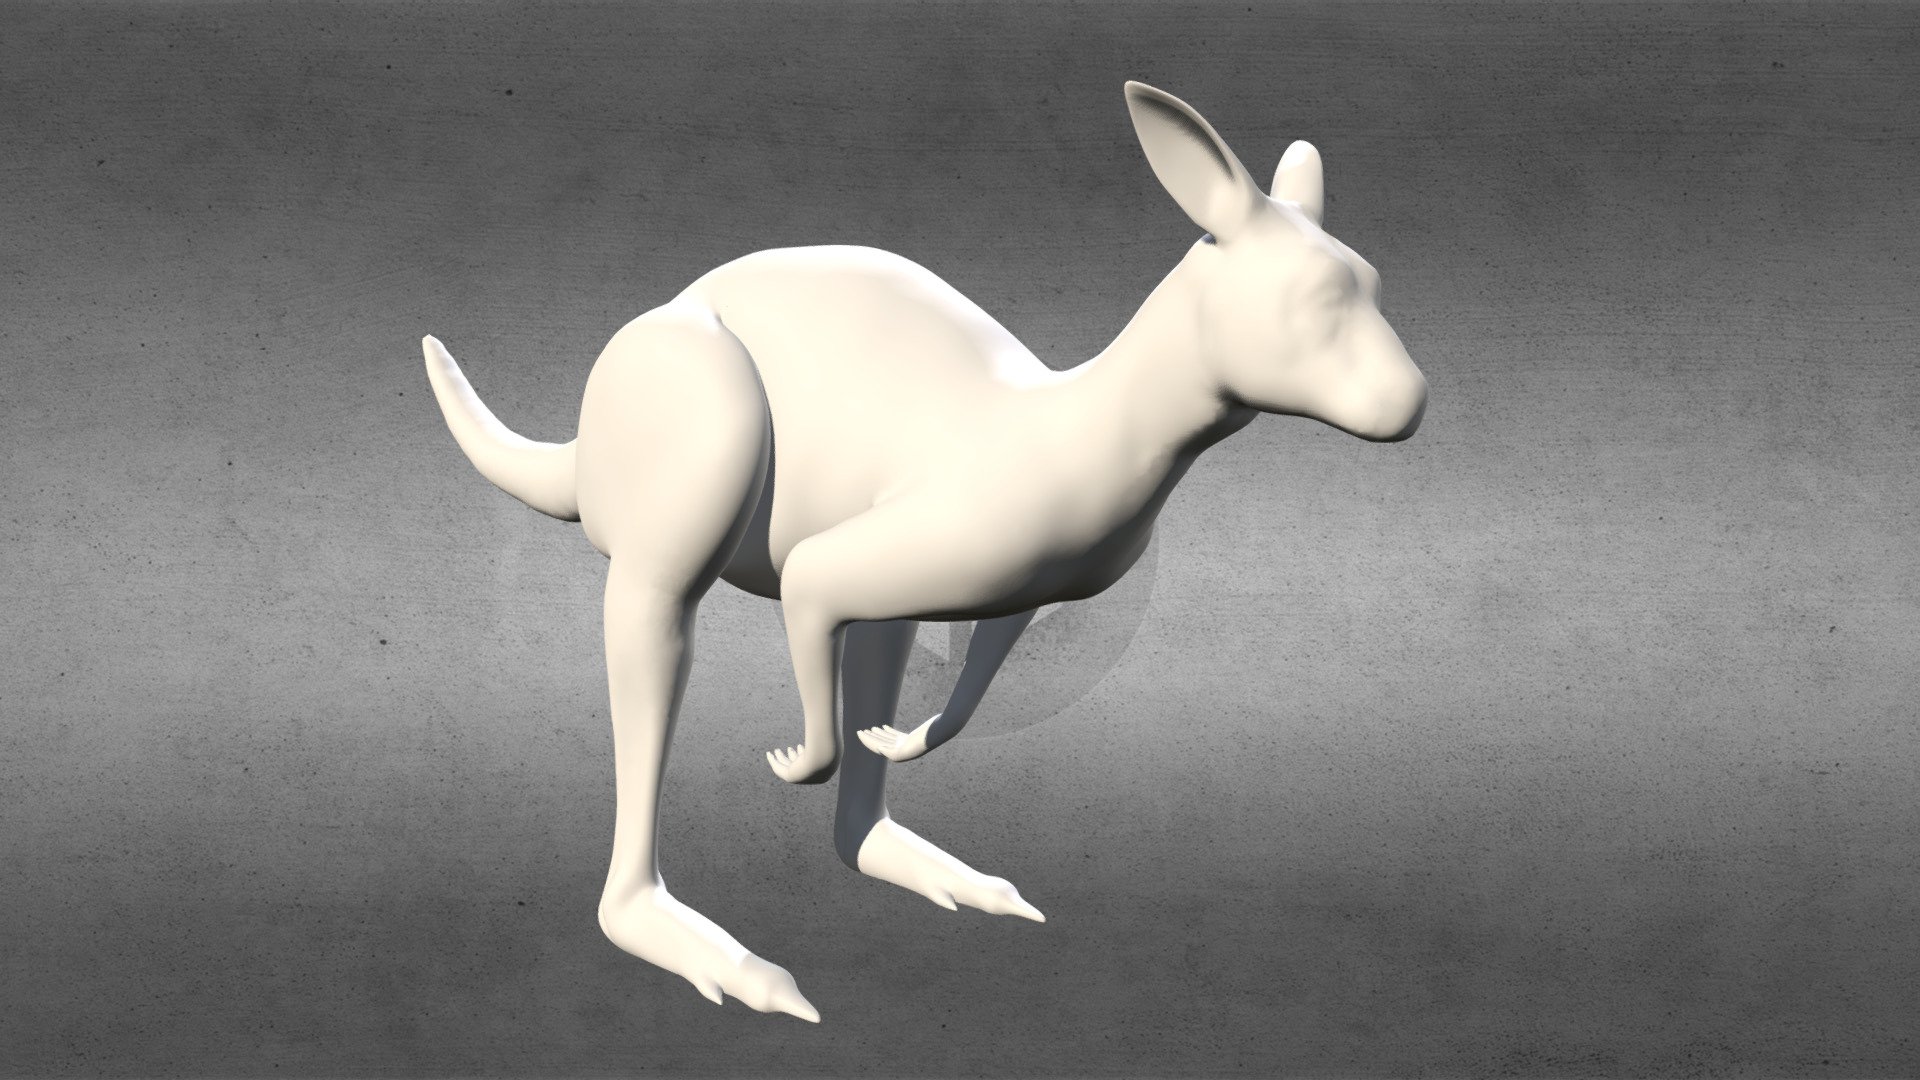 3D CAD model of kangaroo standing - 3D CAD Kangaroo - 3D model by ideabeans 3d model